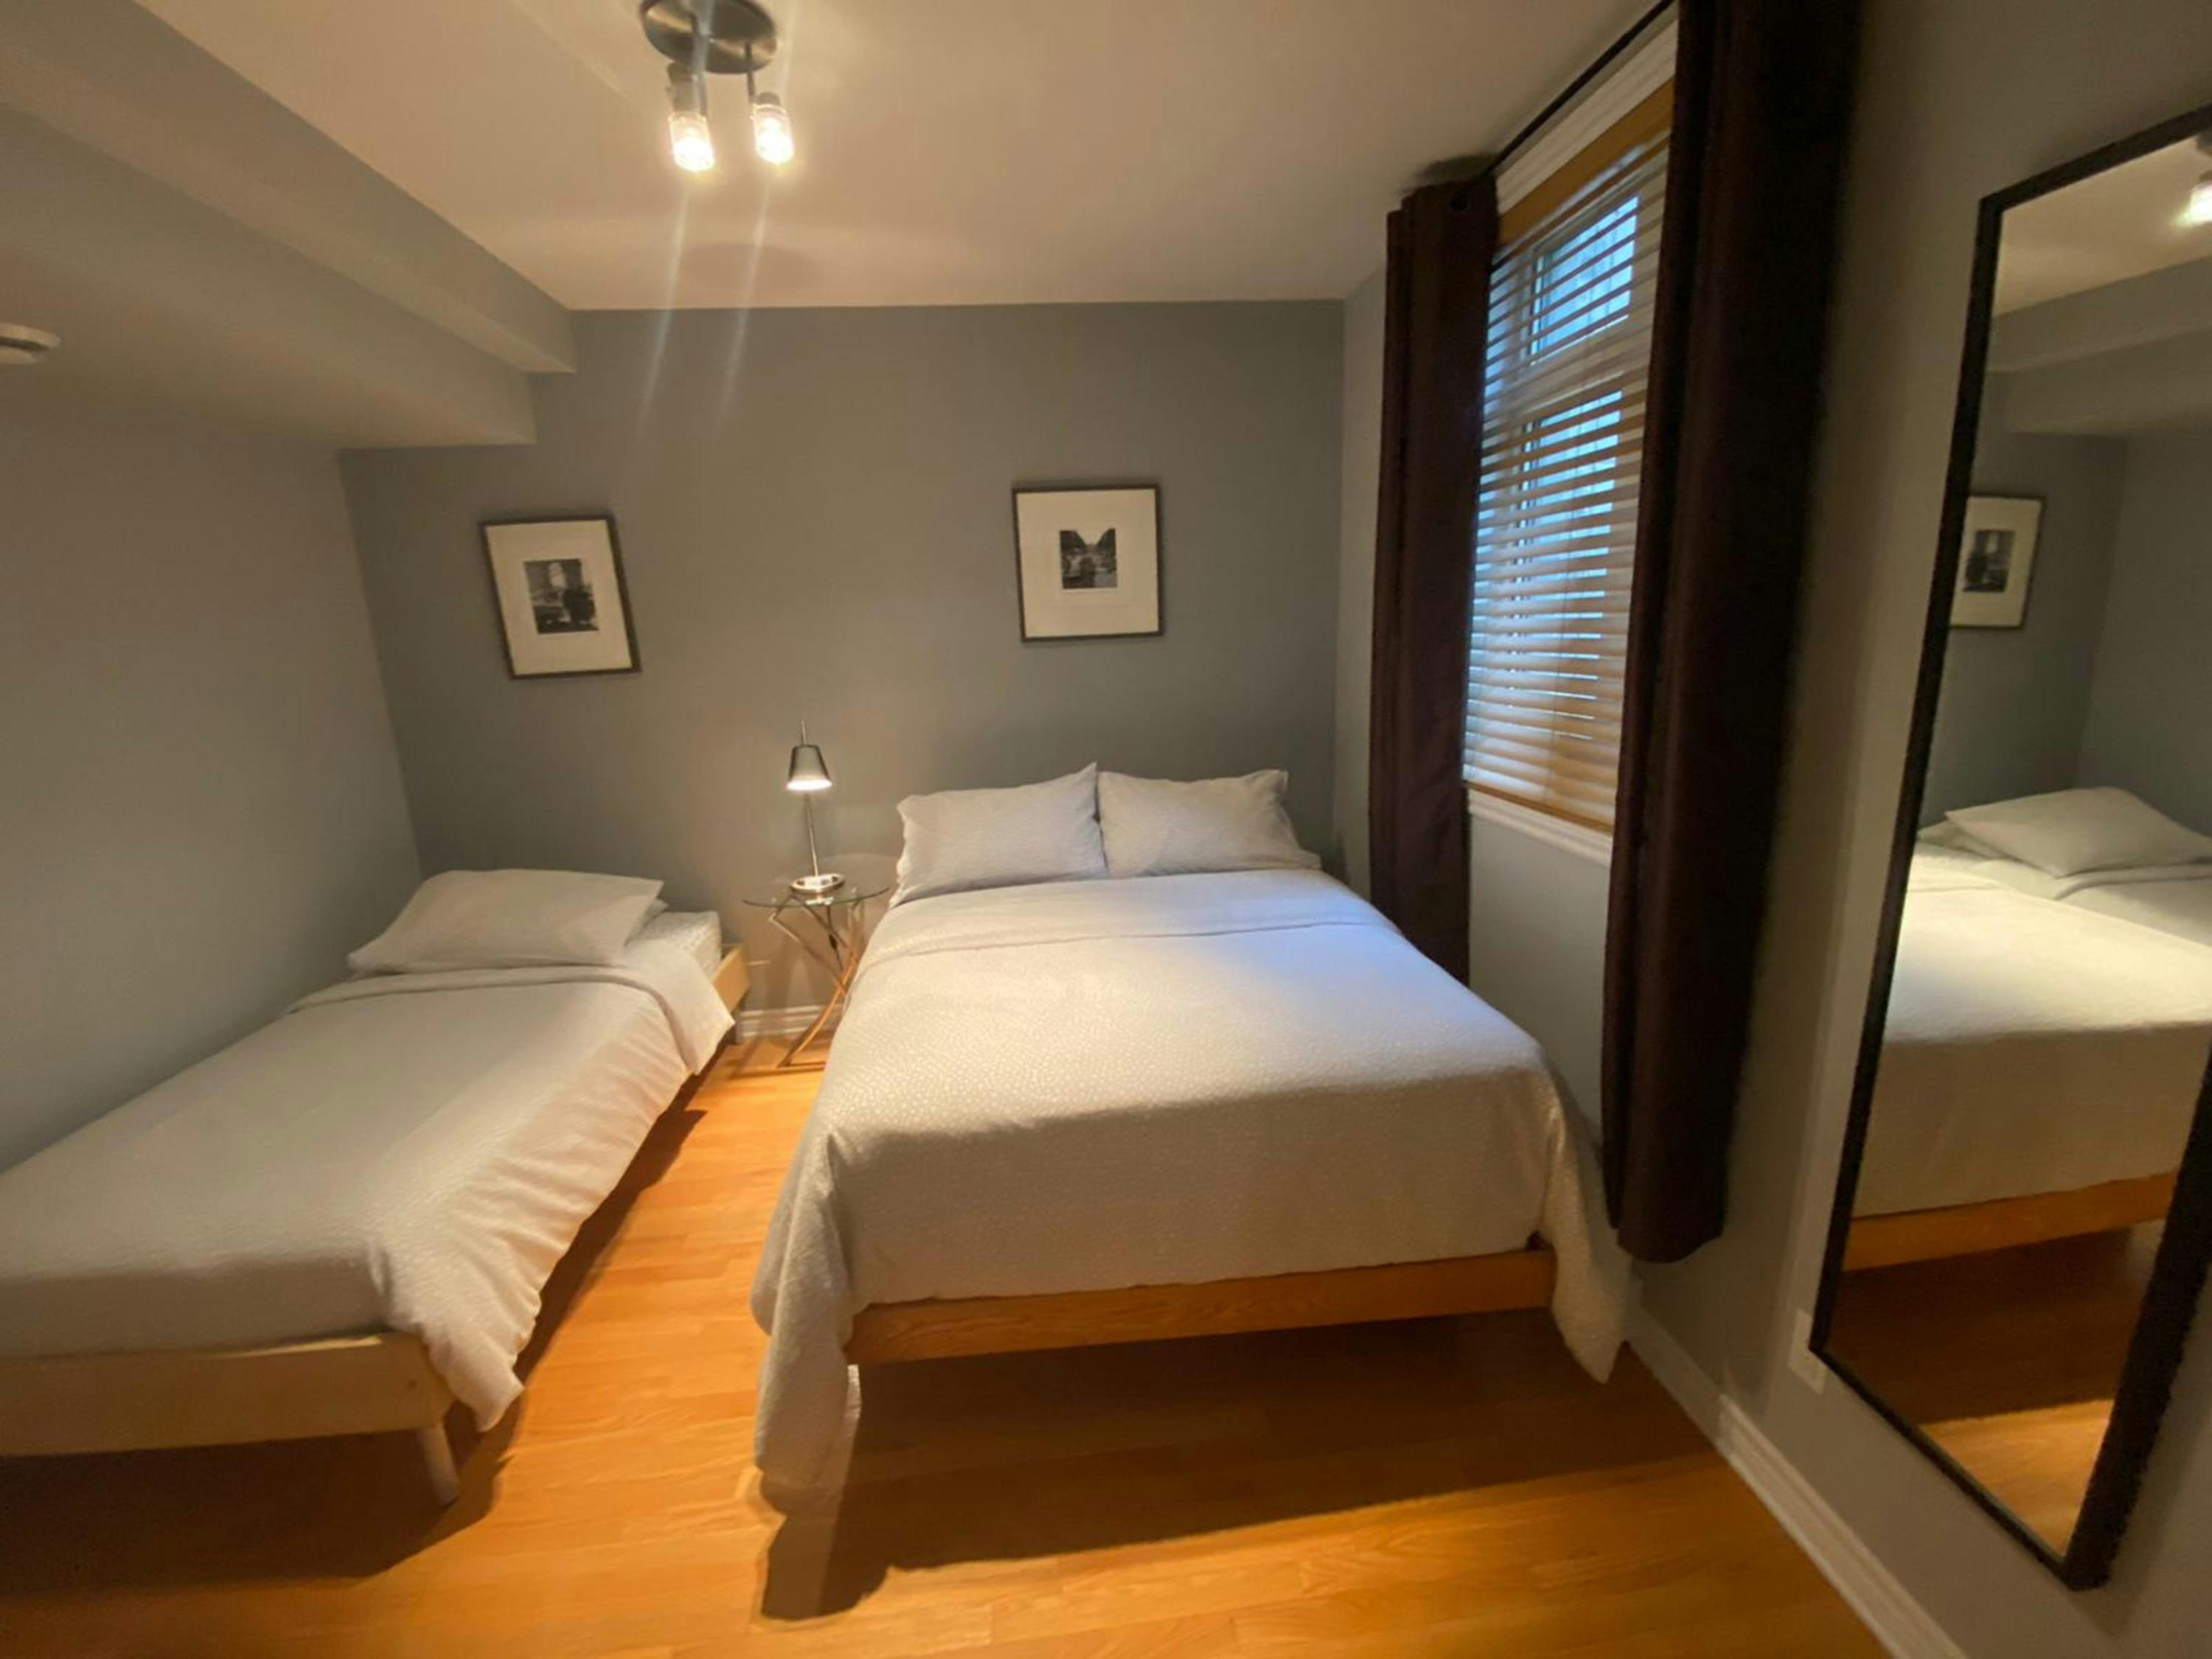 Professional Suite 202 Apart Hotel Montreal Tourist Residence 222512 2115 Rue Saint Urbain H2X 2N1 #aparthotelmontreal